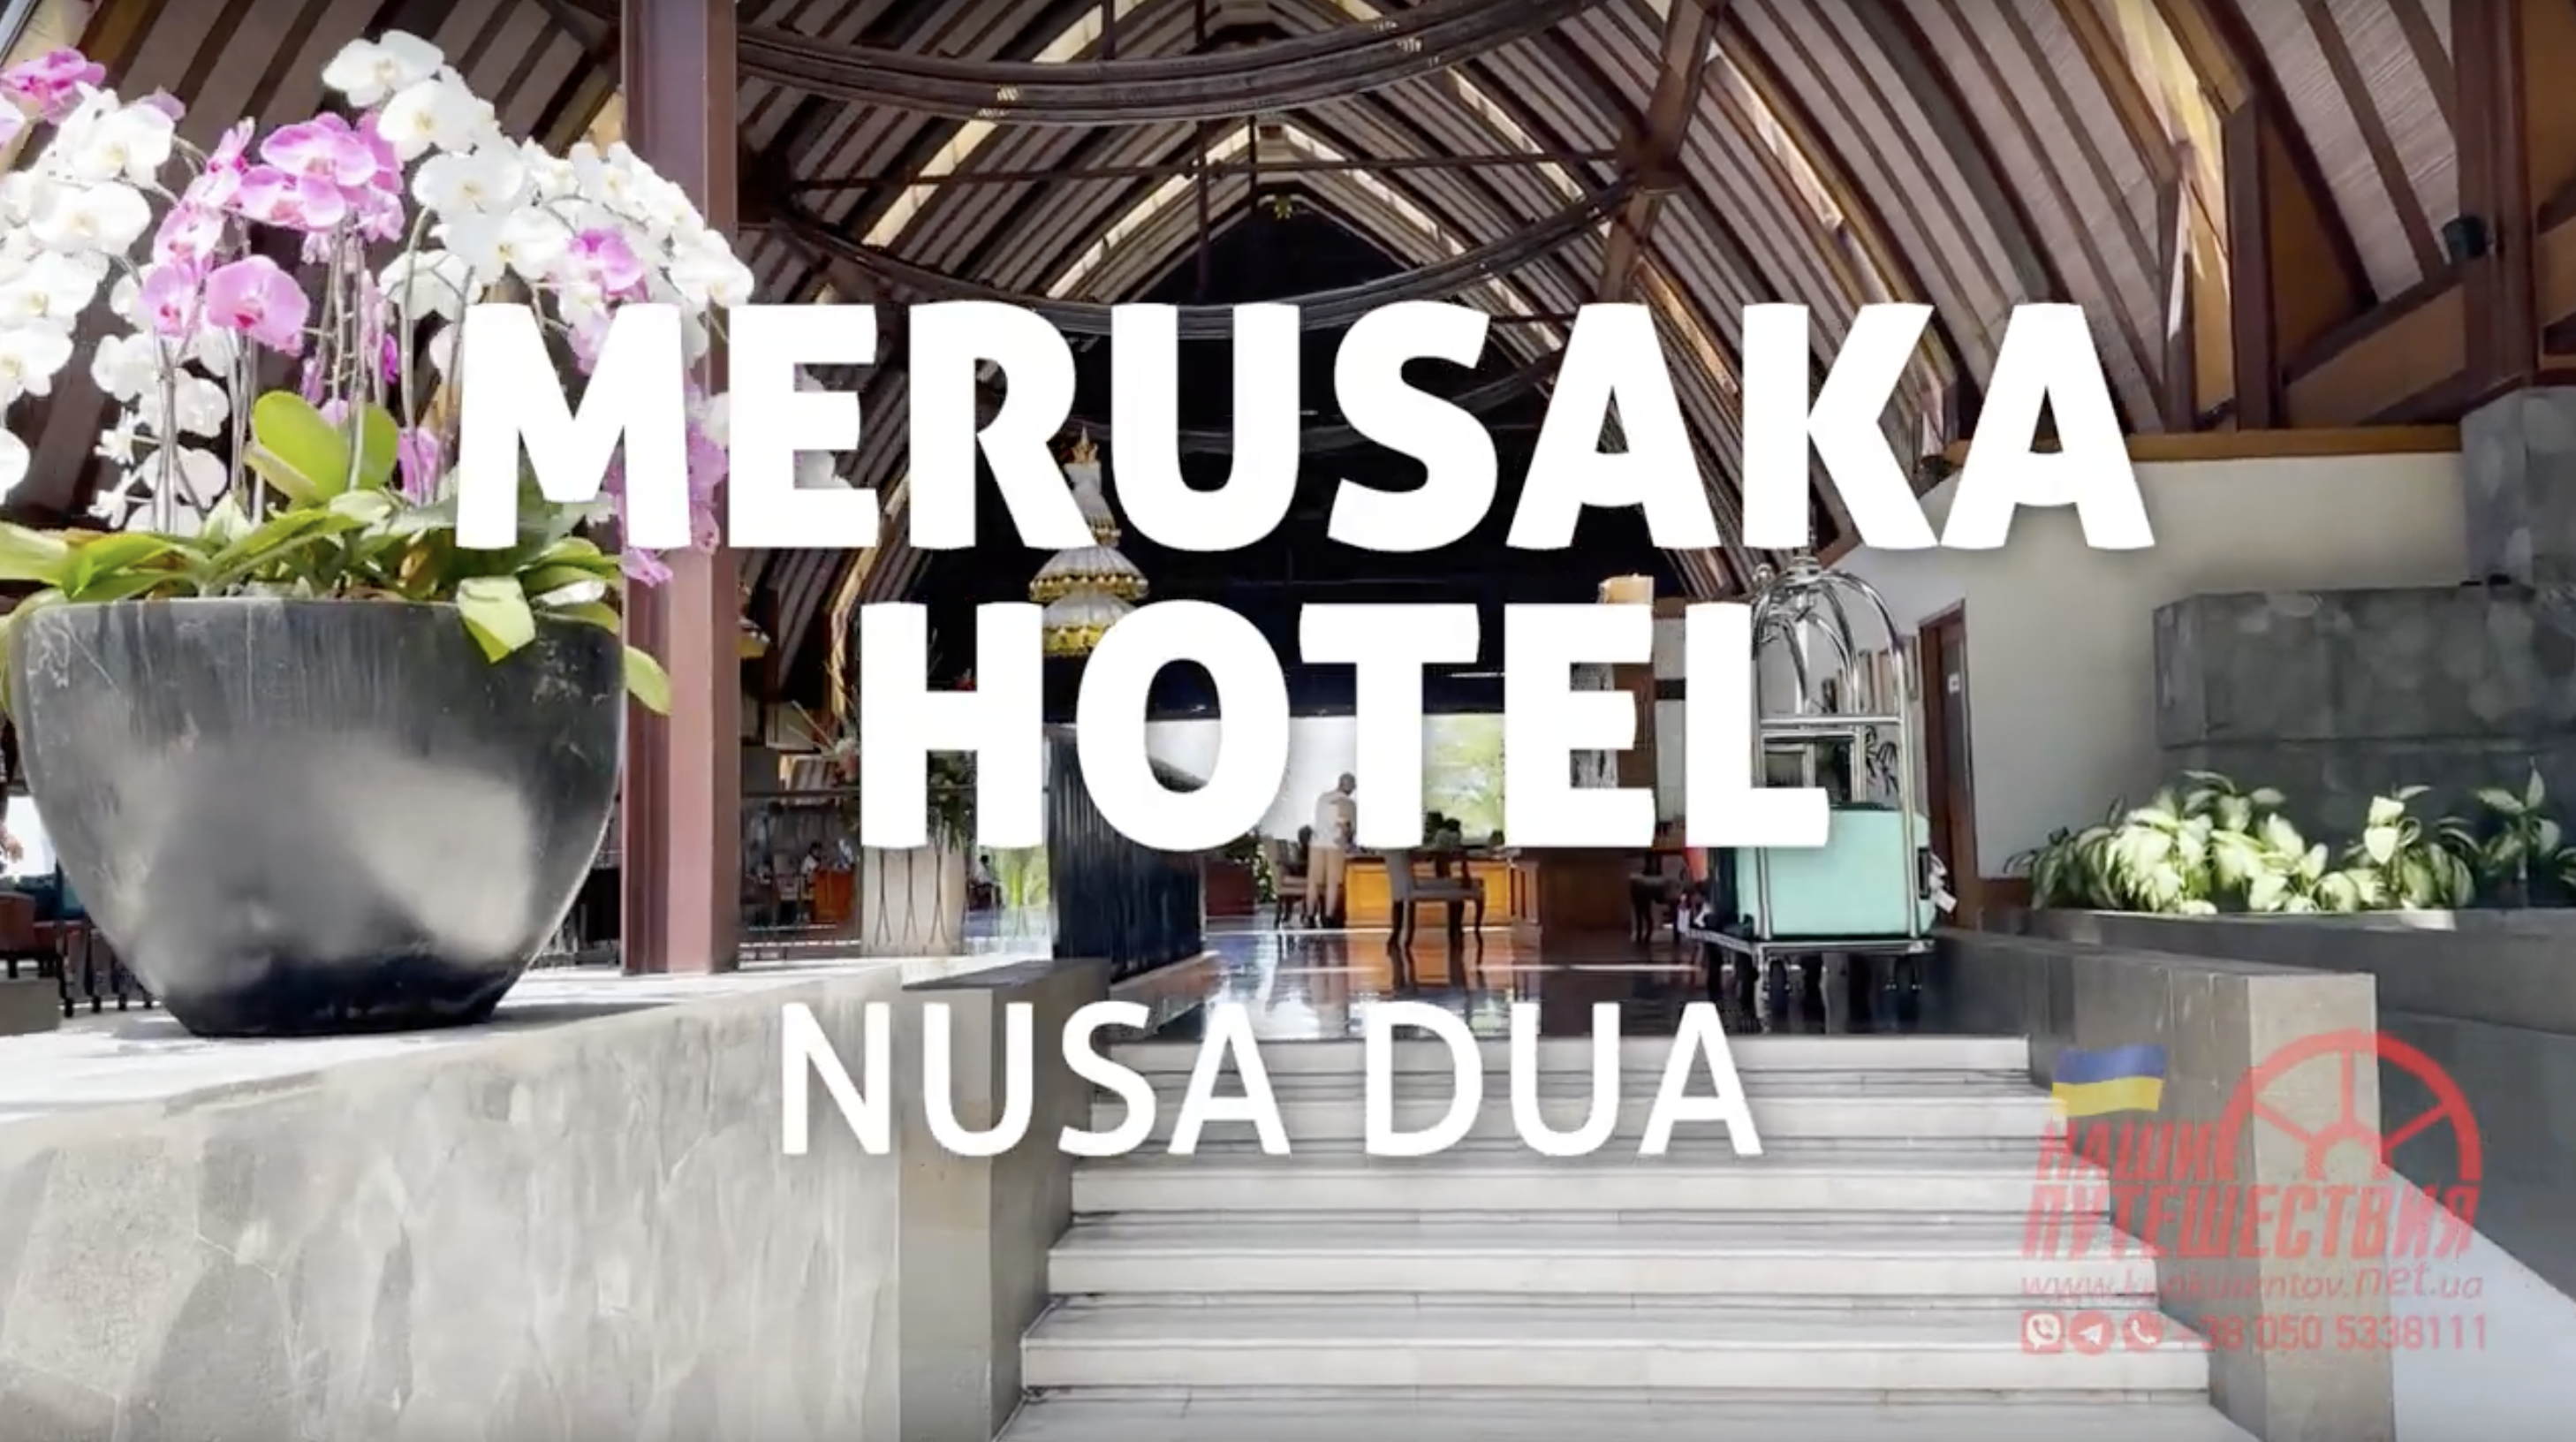 Merusaka Hotel. Bali. Один день в отеле Merusaka Hotel. Bali.